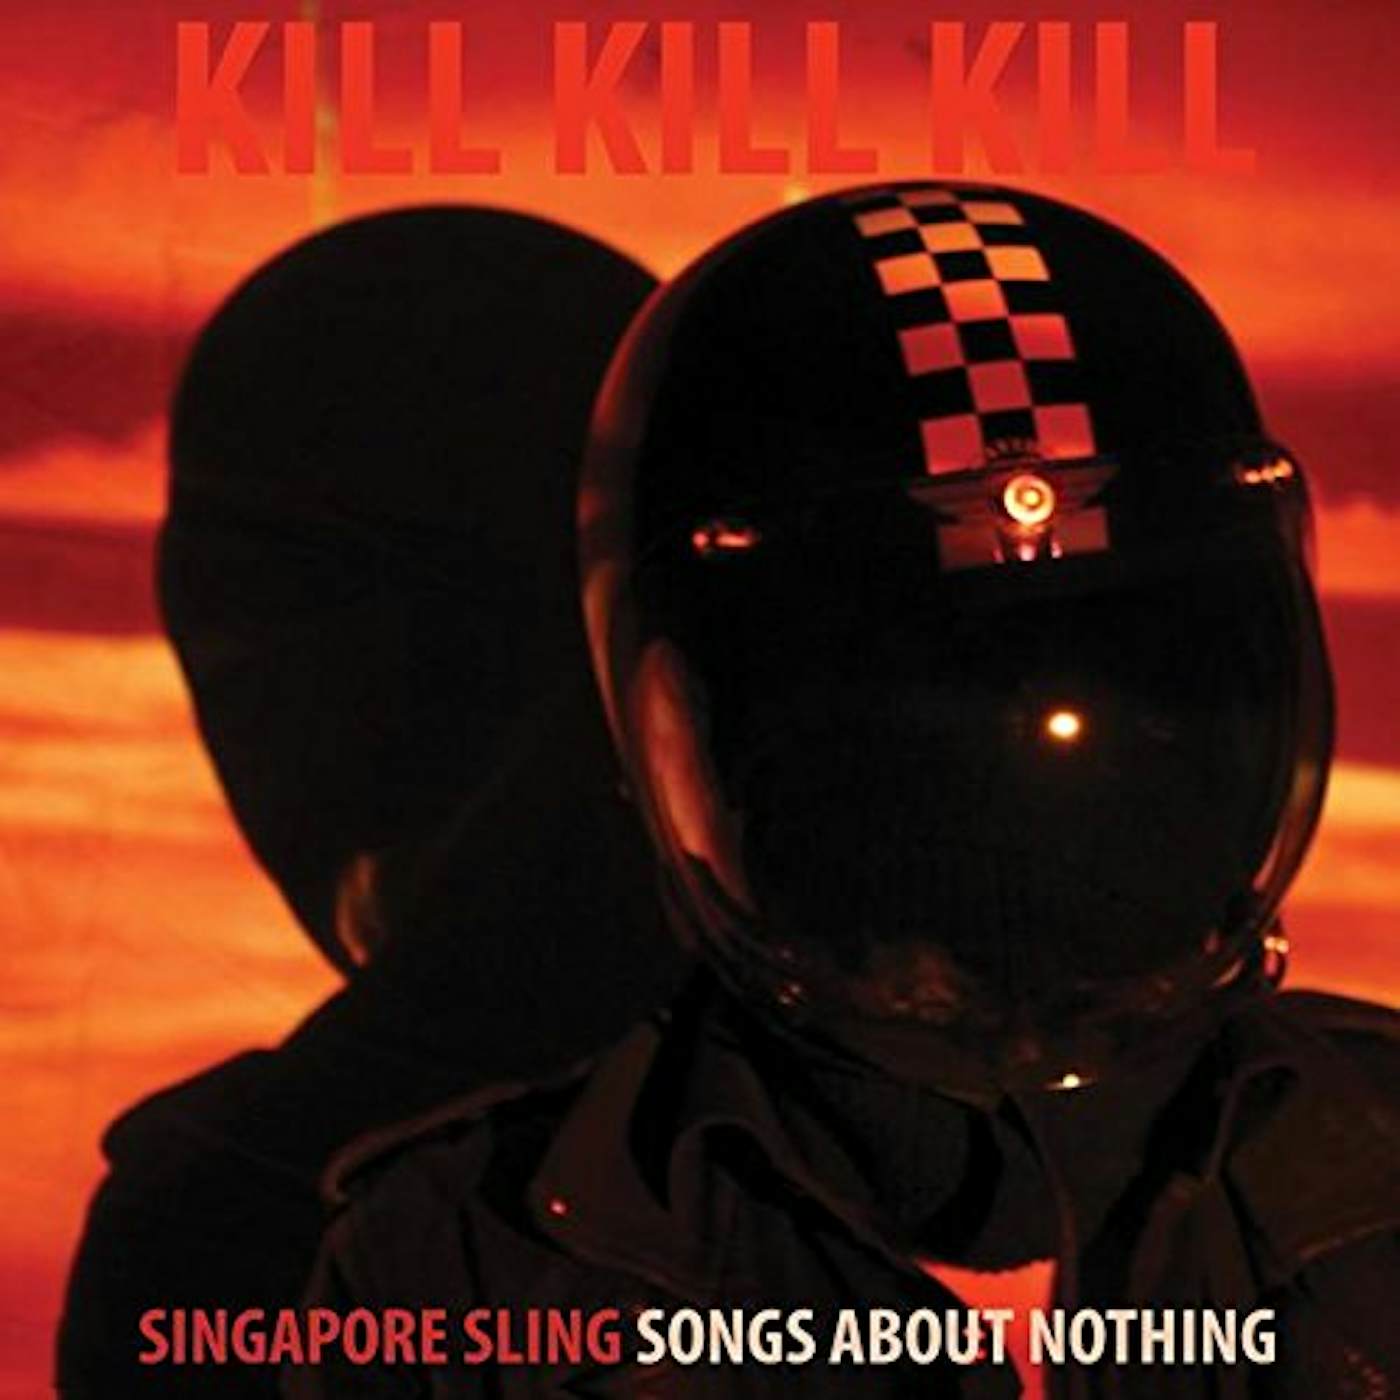 Singapore Sling KILL KILL KILL (SONGS ABOUT NOTHING) CD